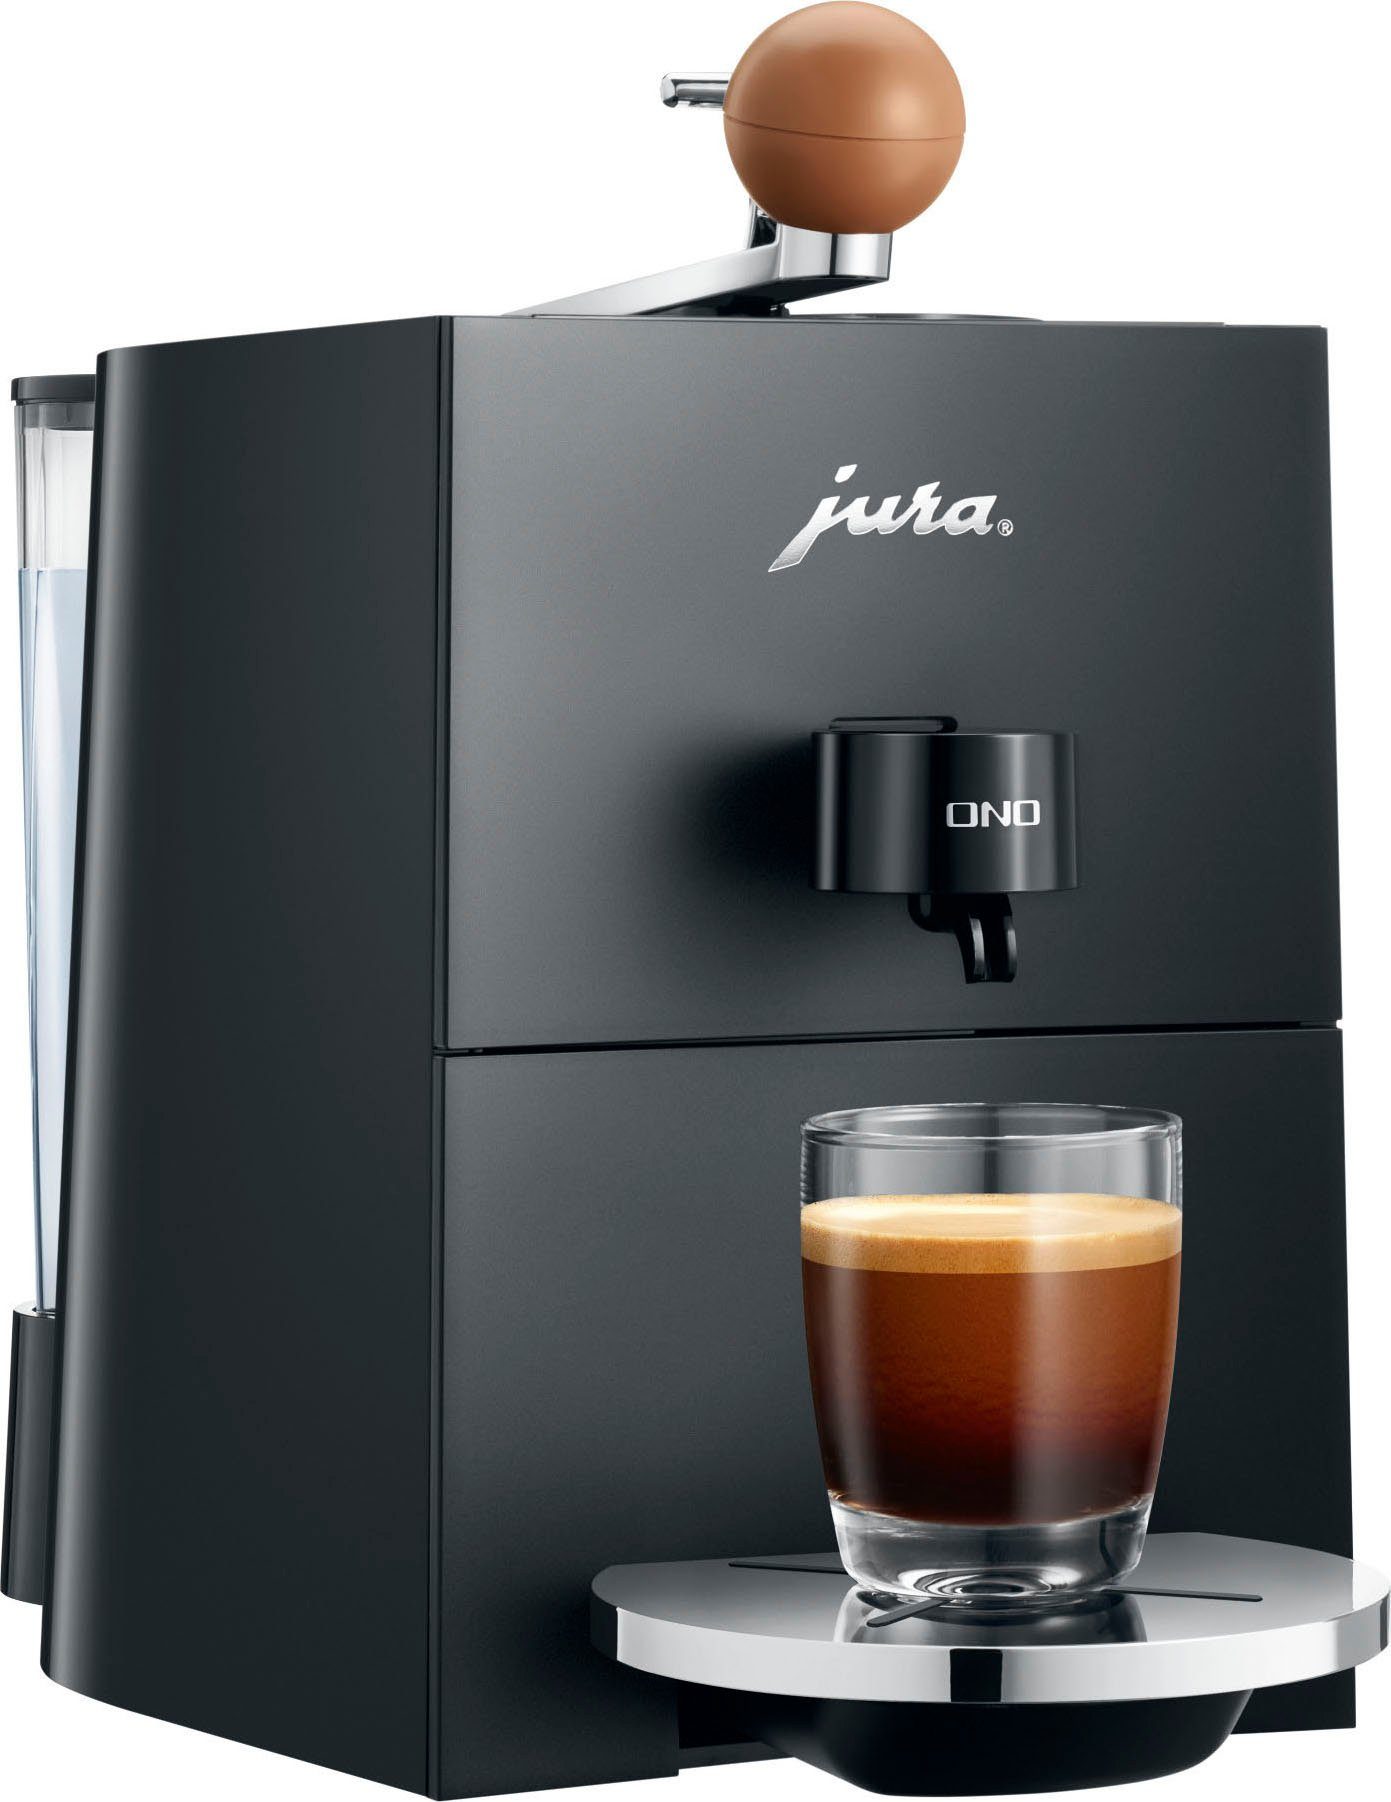 Kaffeehalbautomat 15505 ONO, Espressomaschine JURA